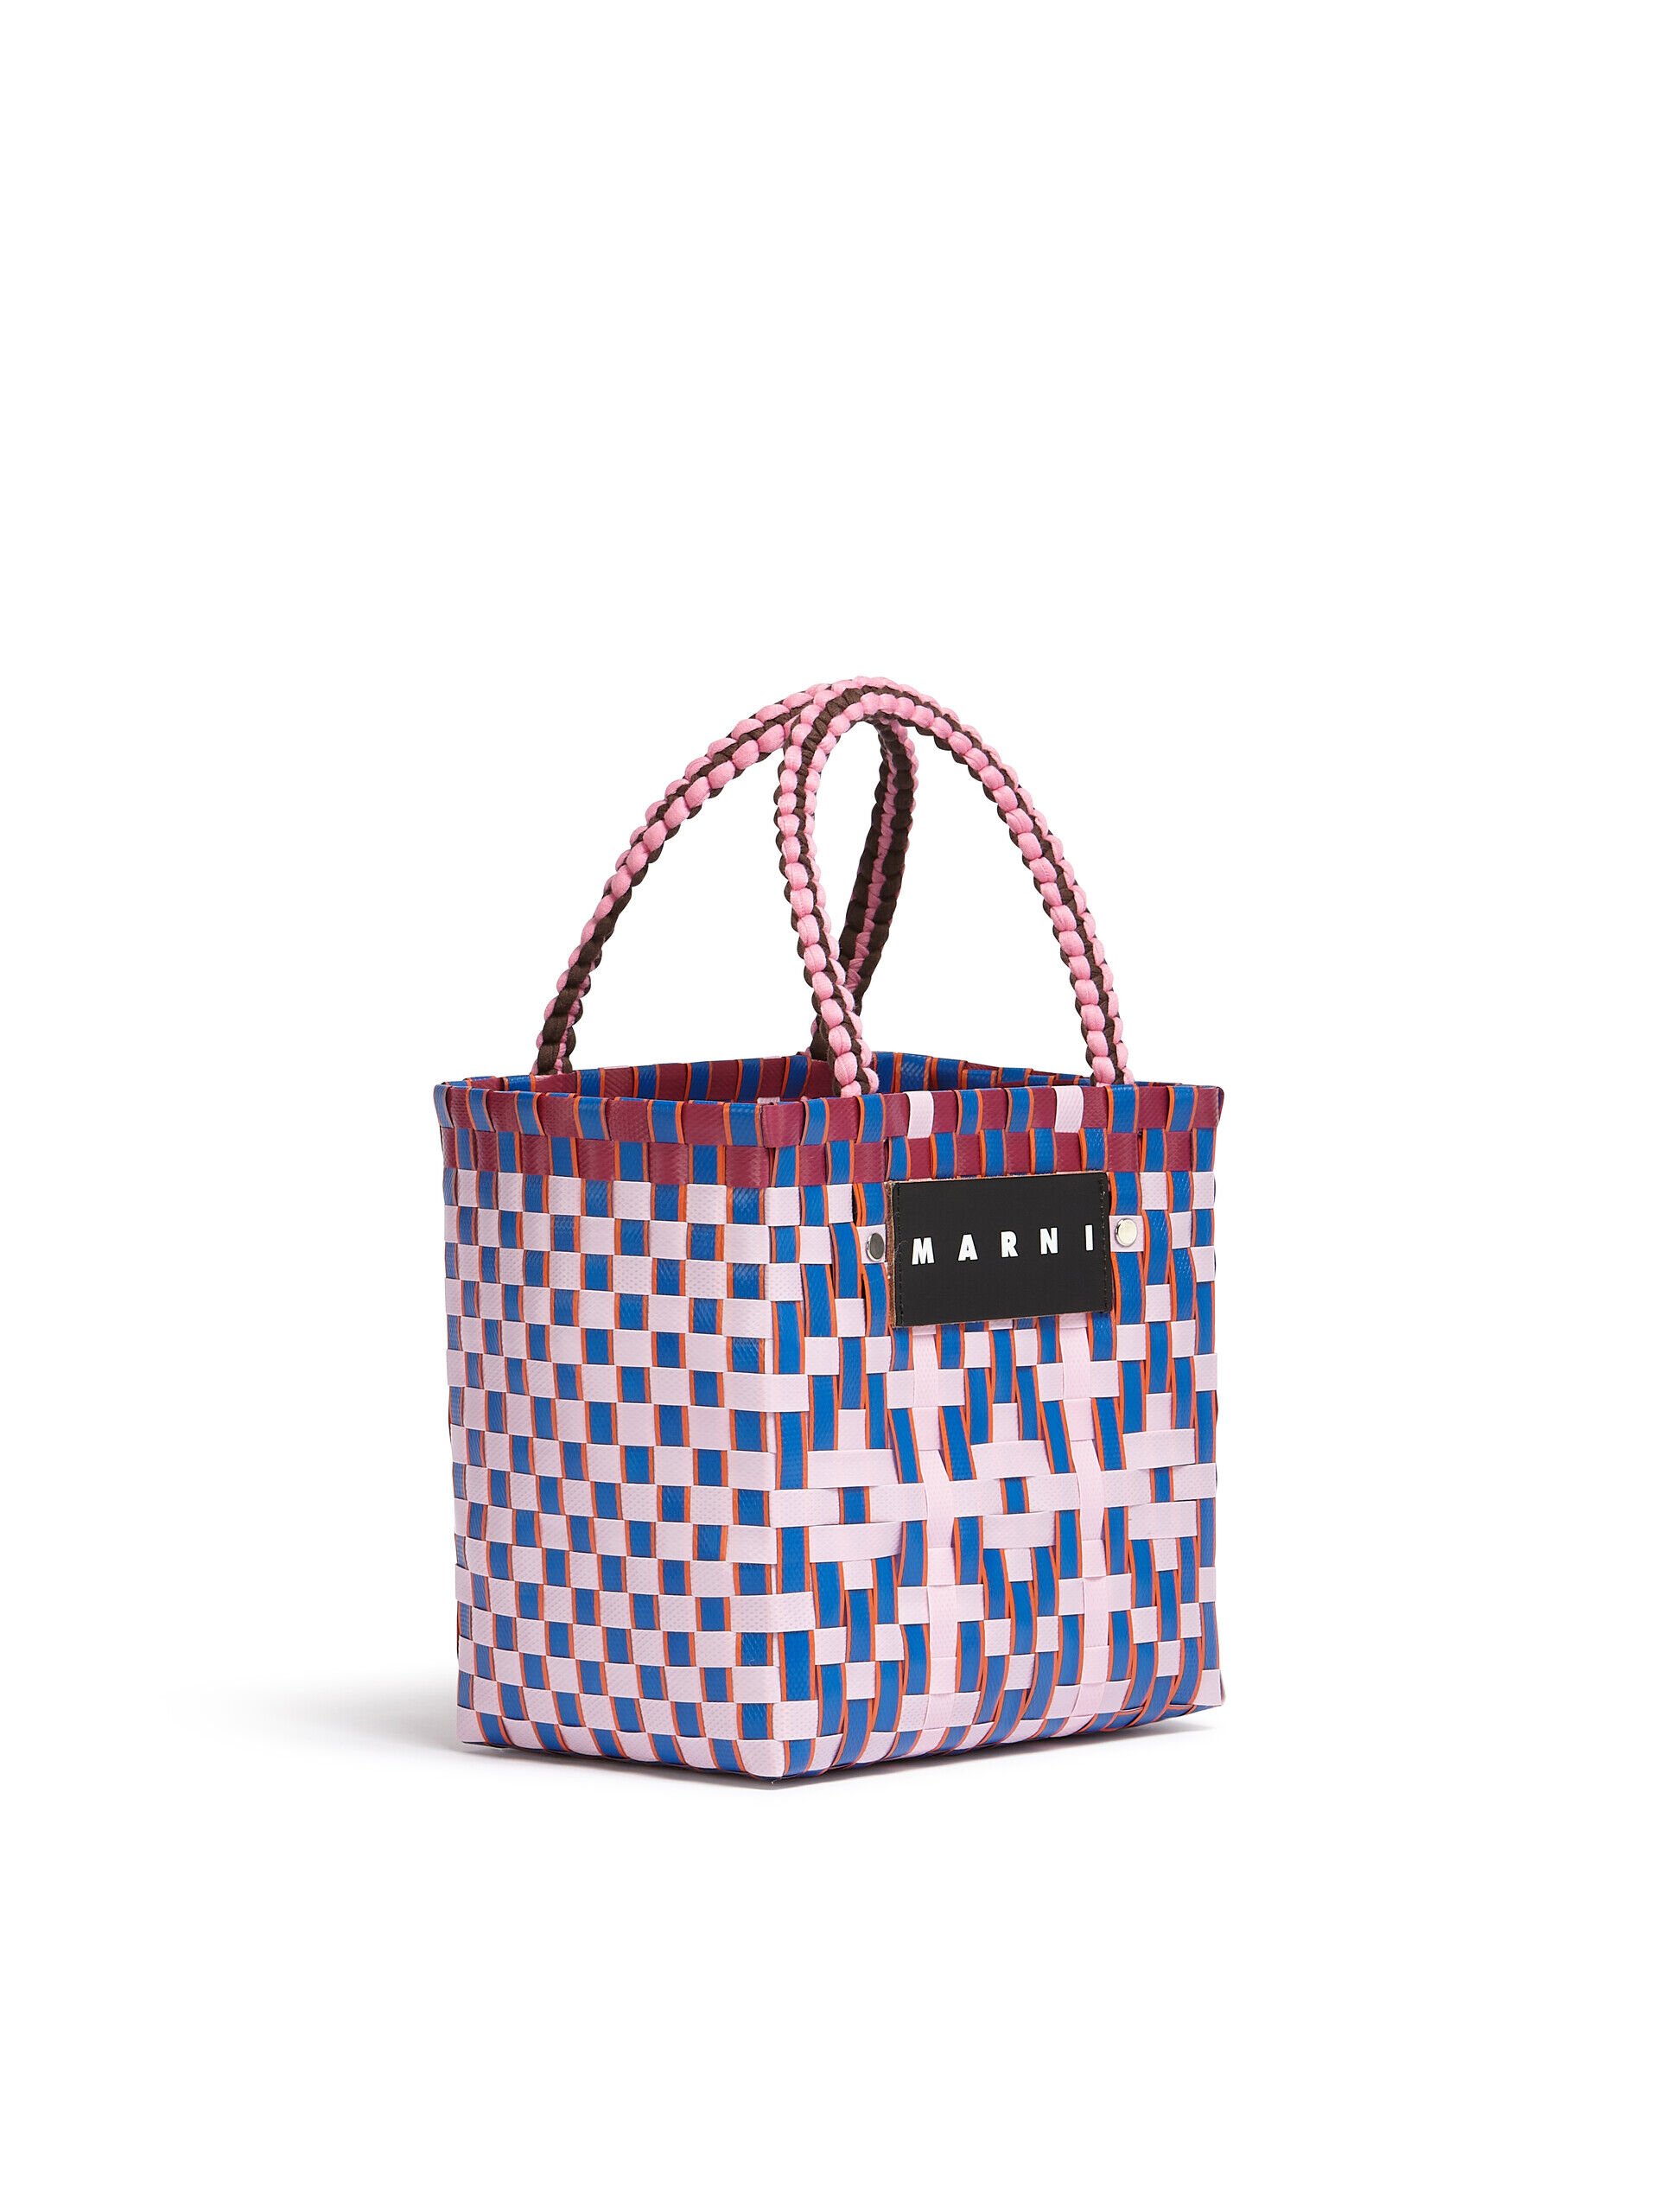 MARNI MARKET BASKET bag in pink diamond woven material | Marni